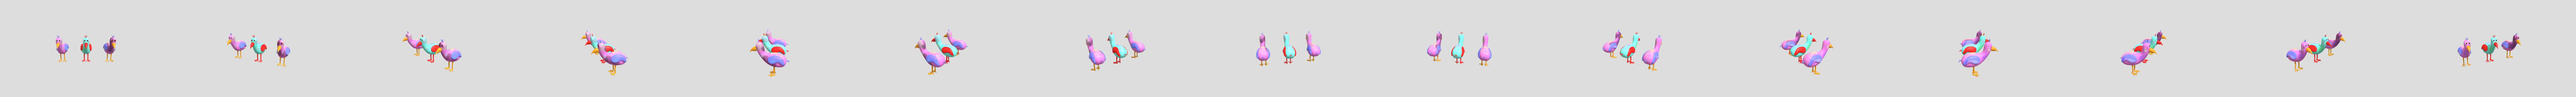 Baby Opila Bird (4K textures pack) - Download Free 3D model by